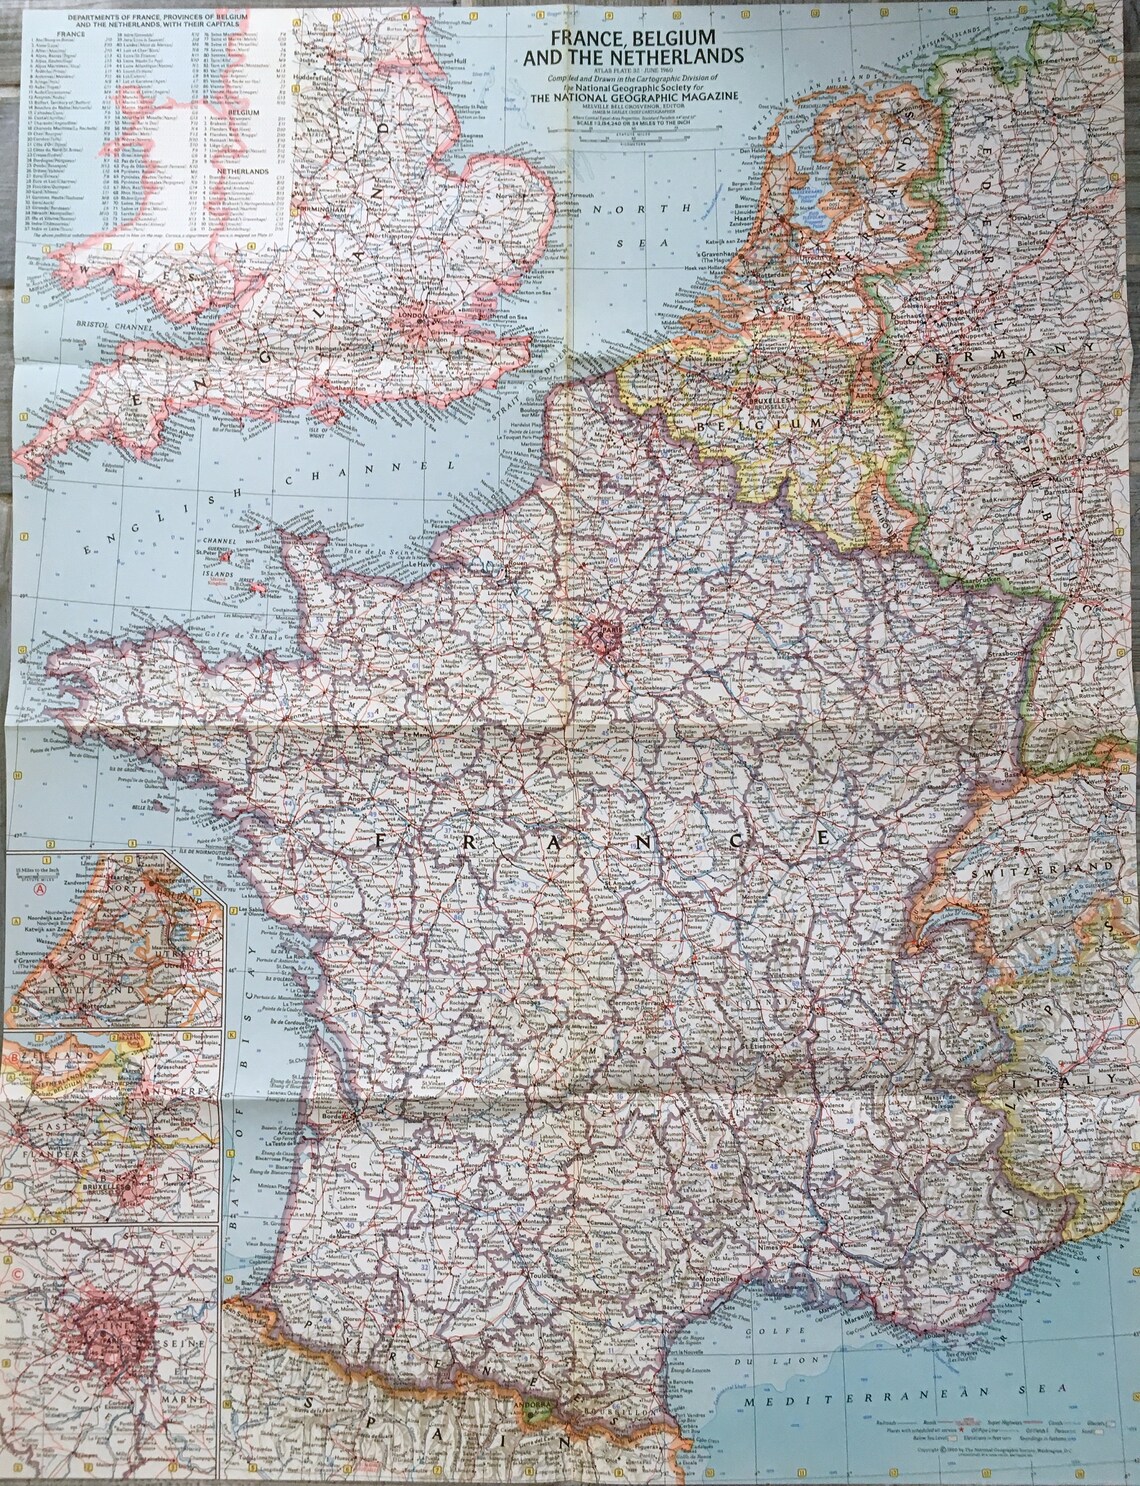 1962 France Belgium and Netherlands Map Original National | Etsy